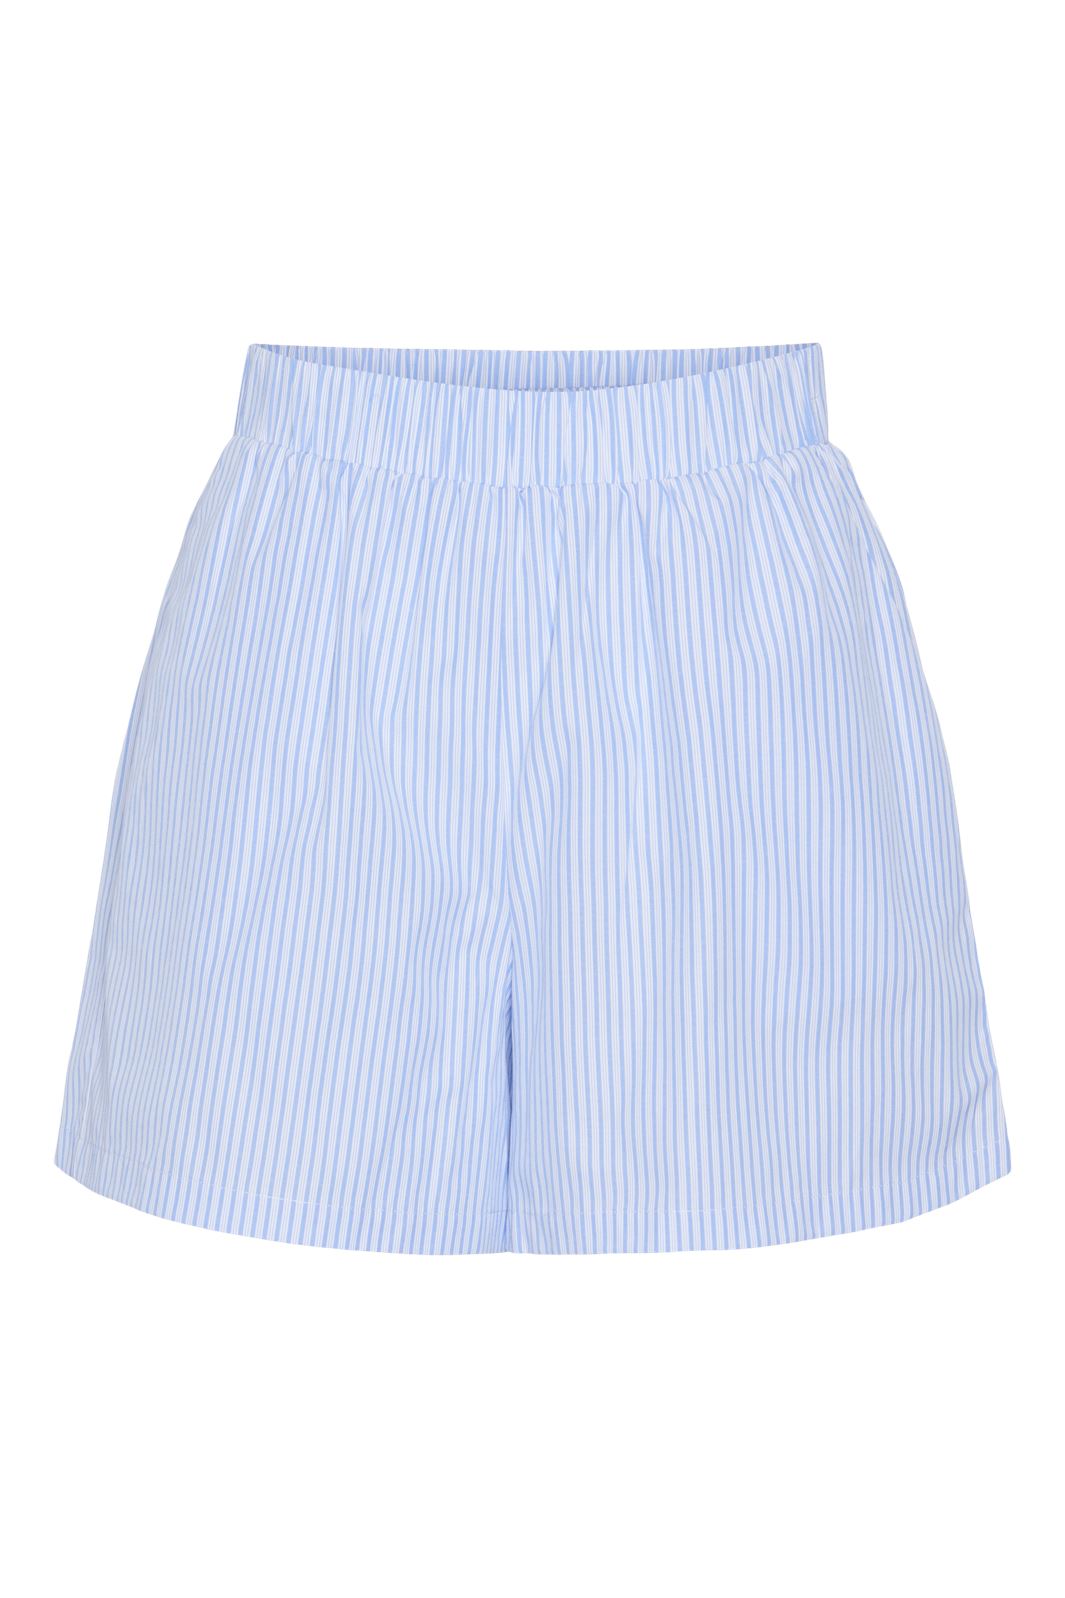 Pieces - Pcholly Shorts - 4648702 Cornflower Blue White